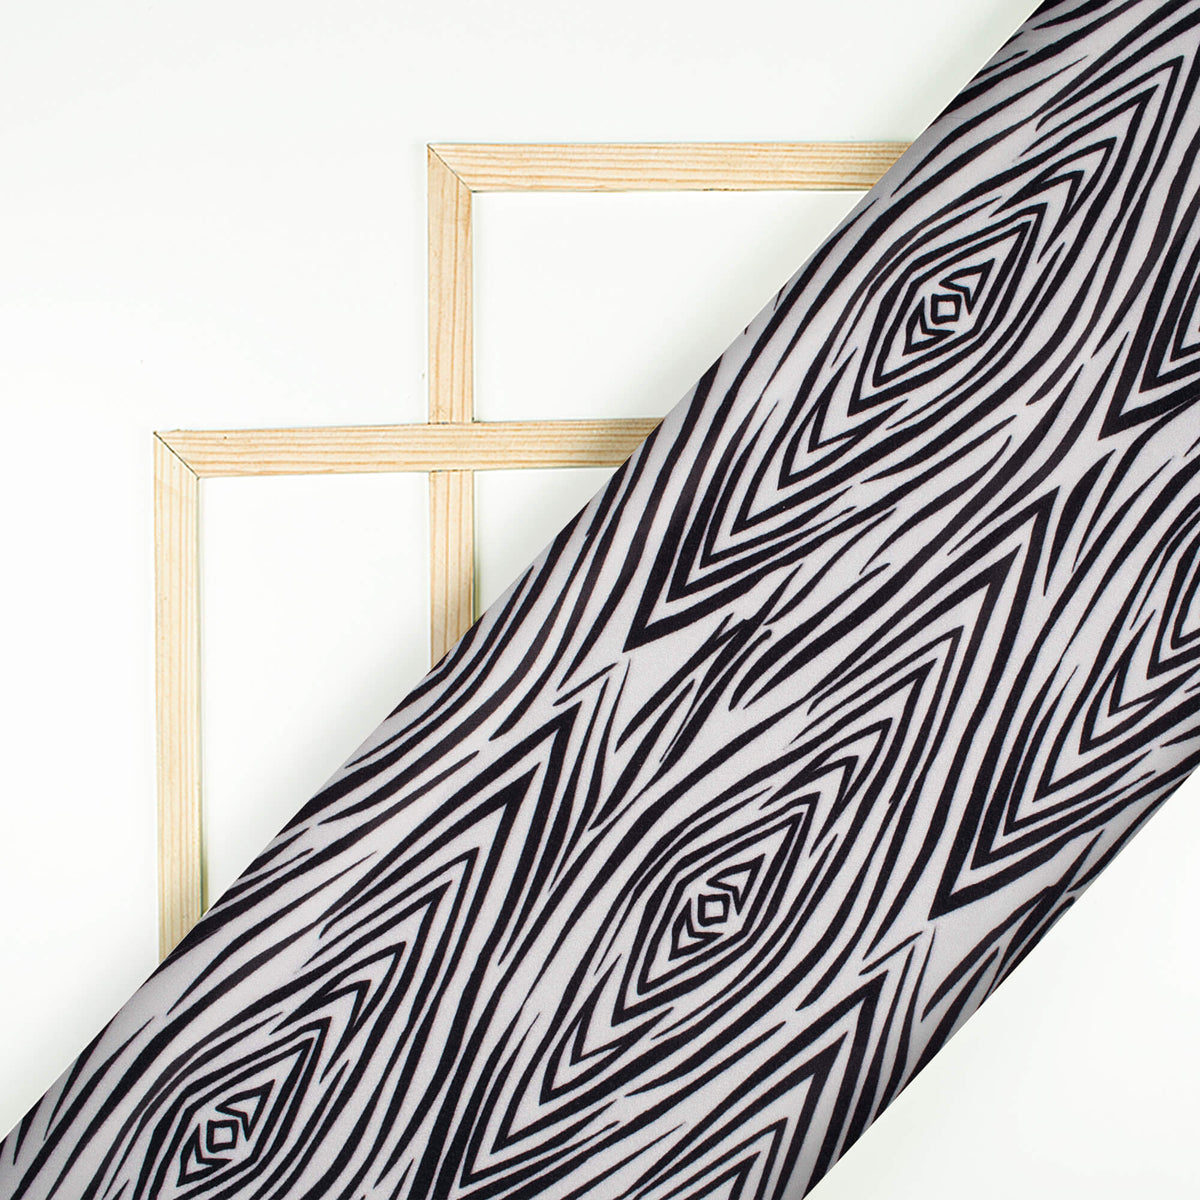 Black And White Abstract Pattern Digital Print Lush Satin Fabric